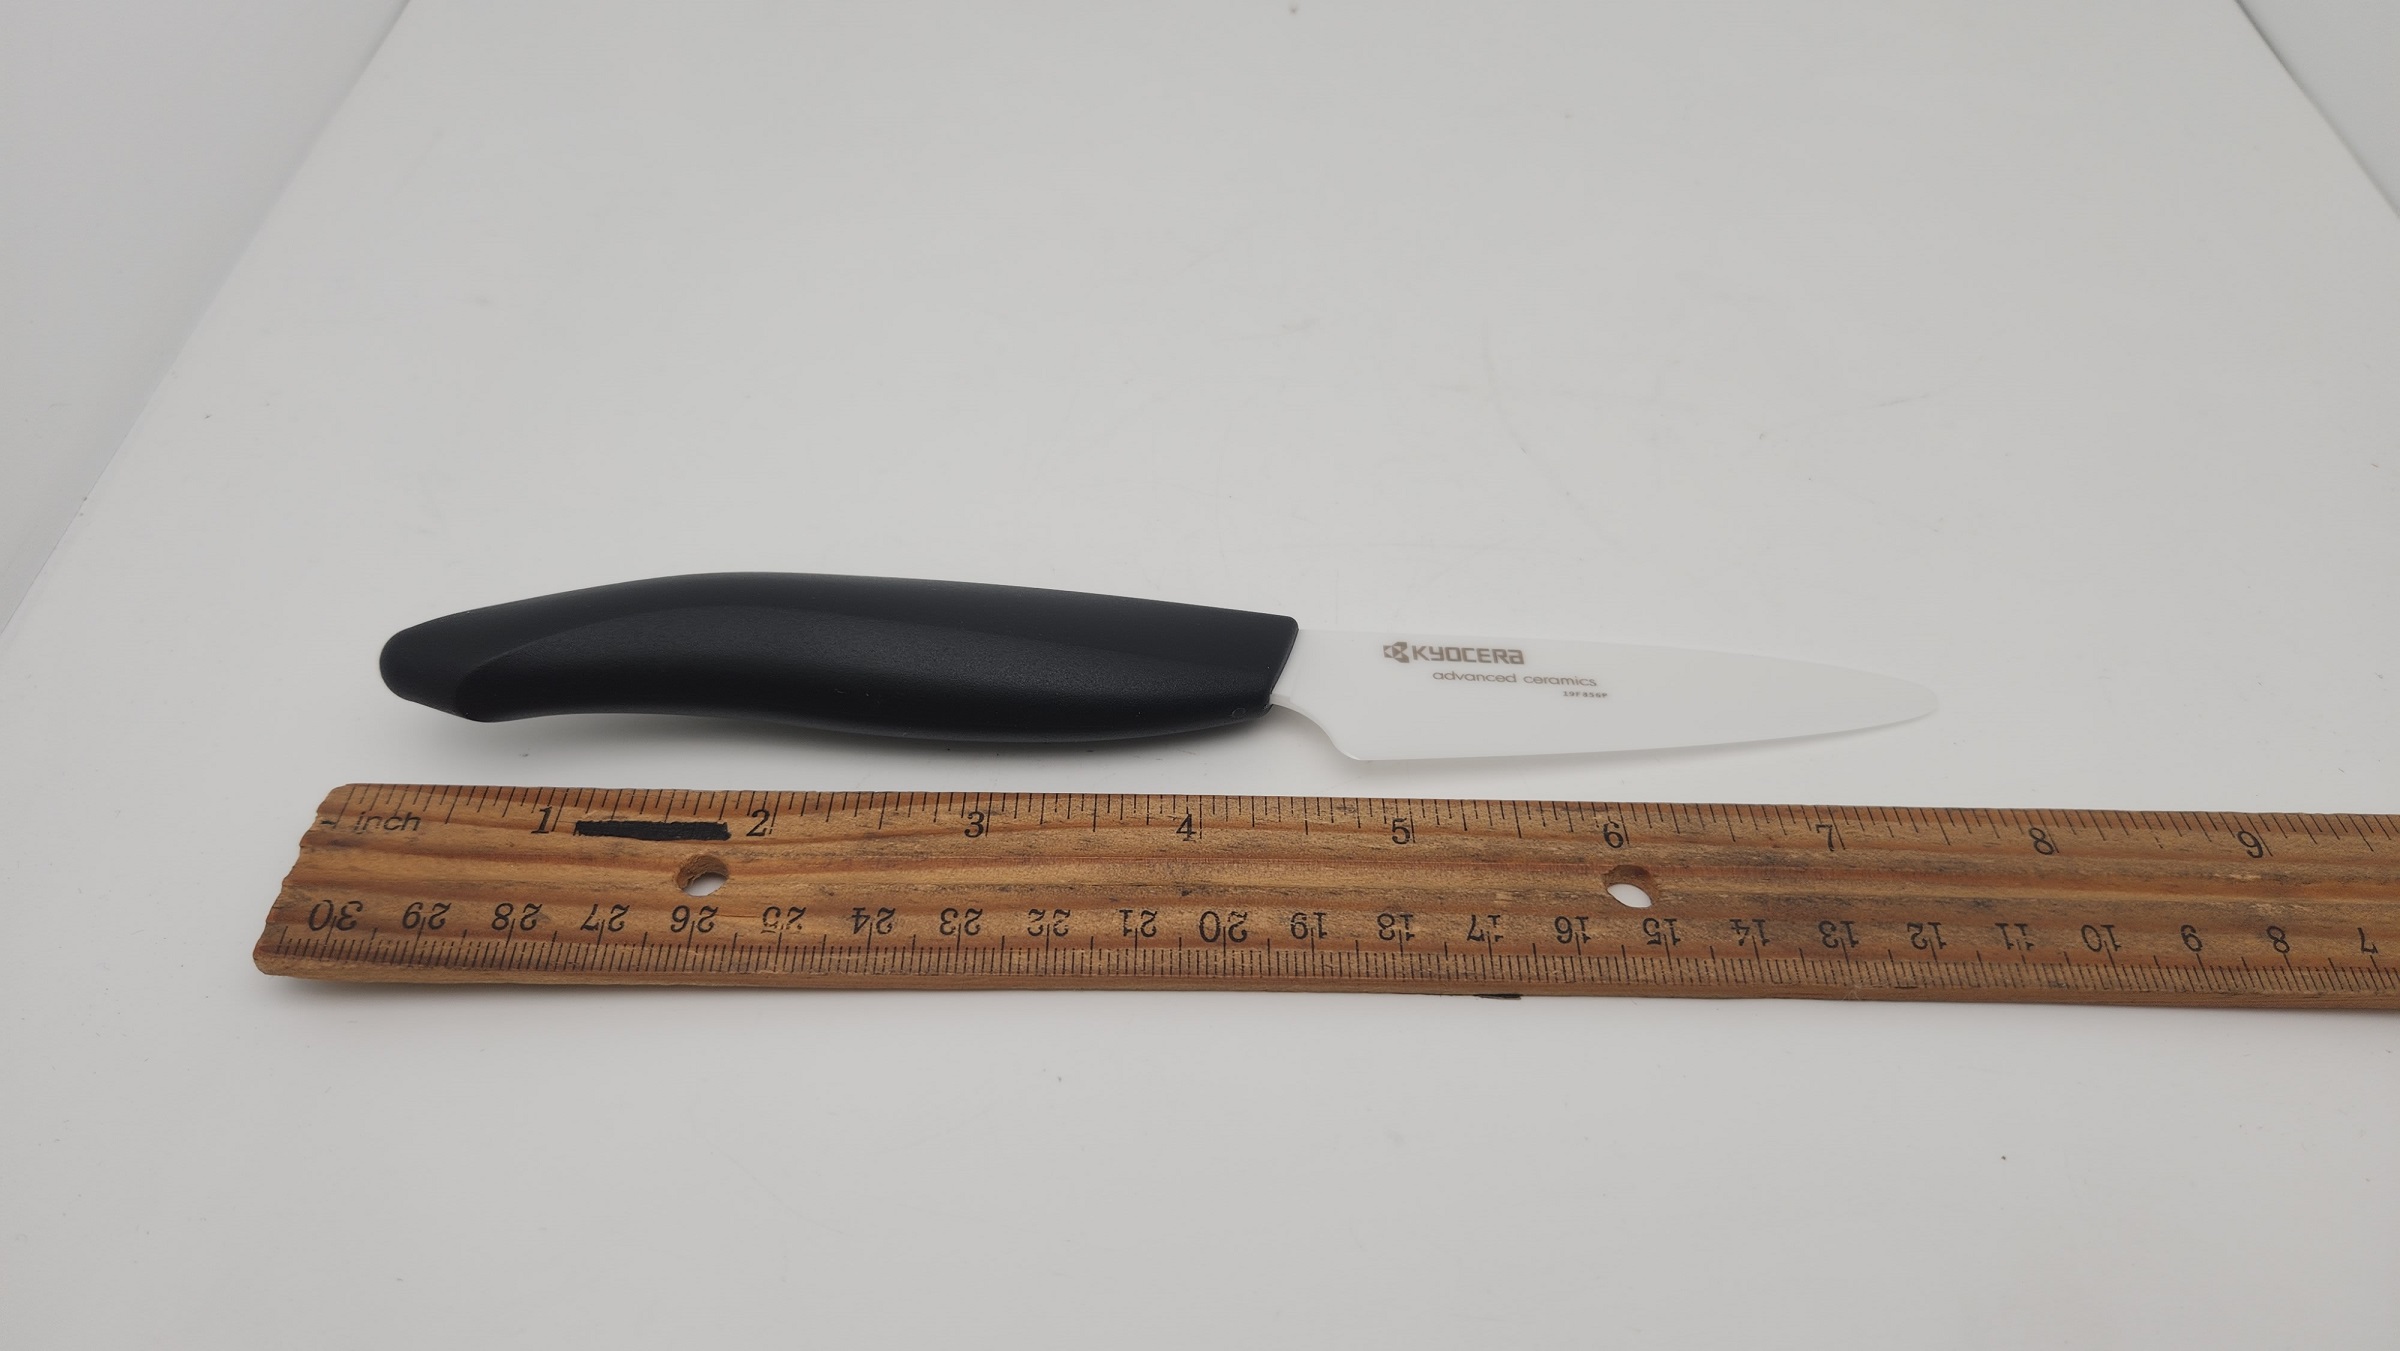 https://heimerdingercutlery.com/wp-content/uploads/2010/11/FK-075-WH-BK-Ceramic-Paring-Knife-3-IN-with-Black-Handle-by-Kyocera-3.jpg